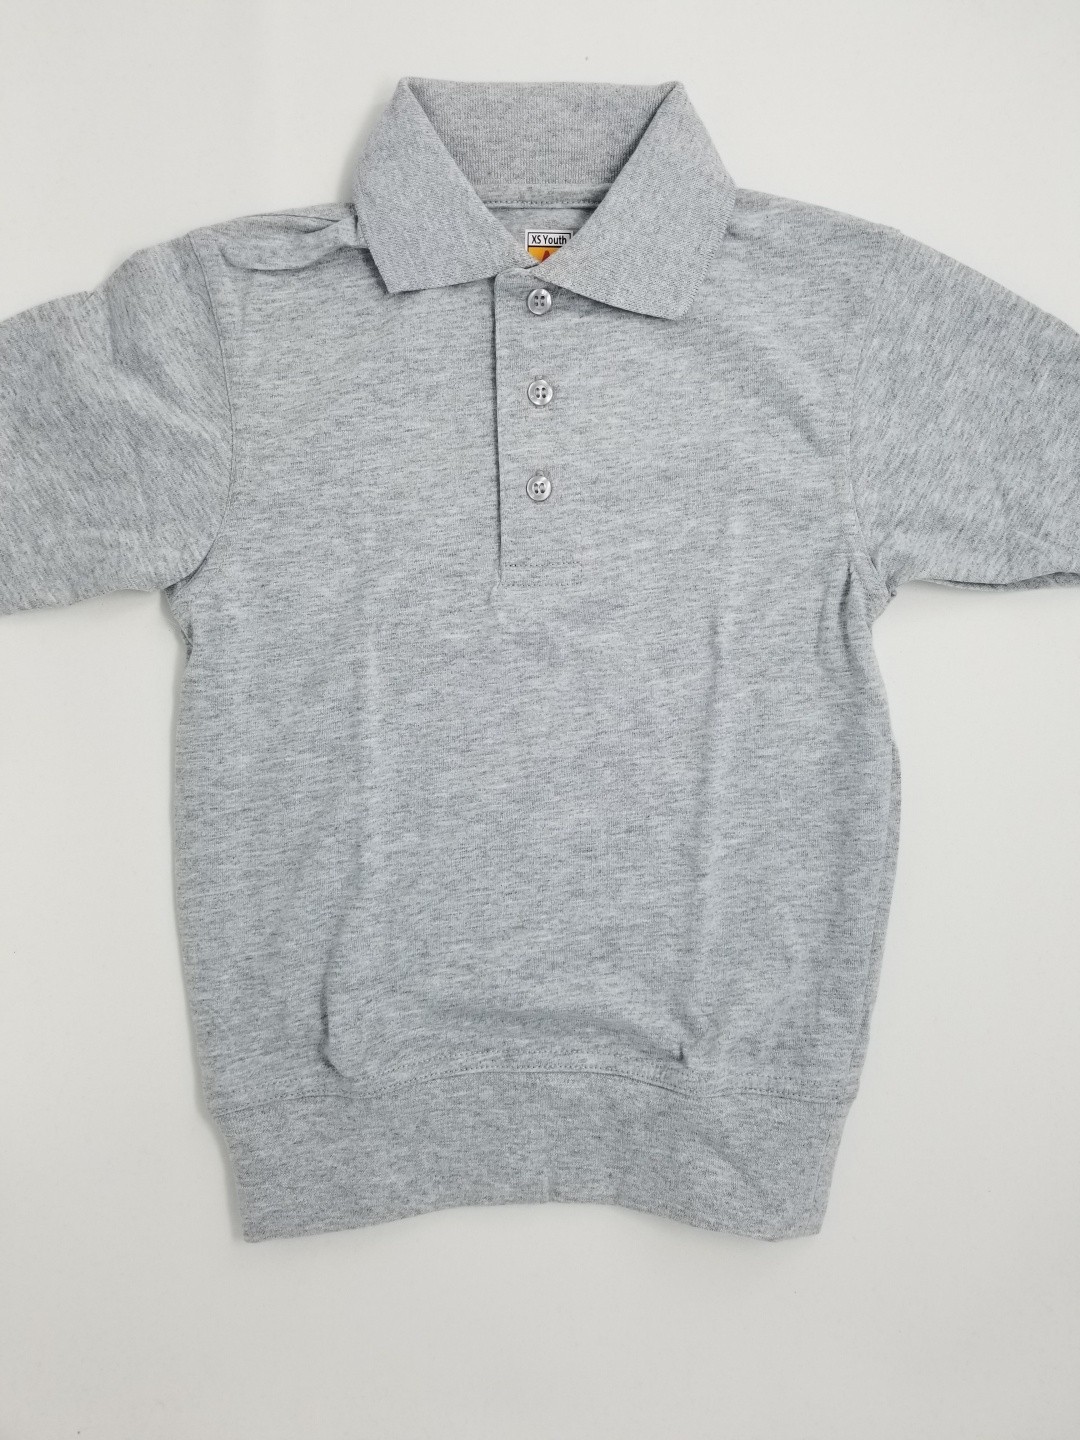 Banded Bottom "No Tuck" Knit Shirt- Smooth/Jersey- Short Sleeve-Grey